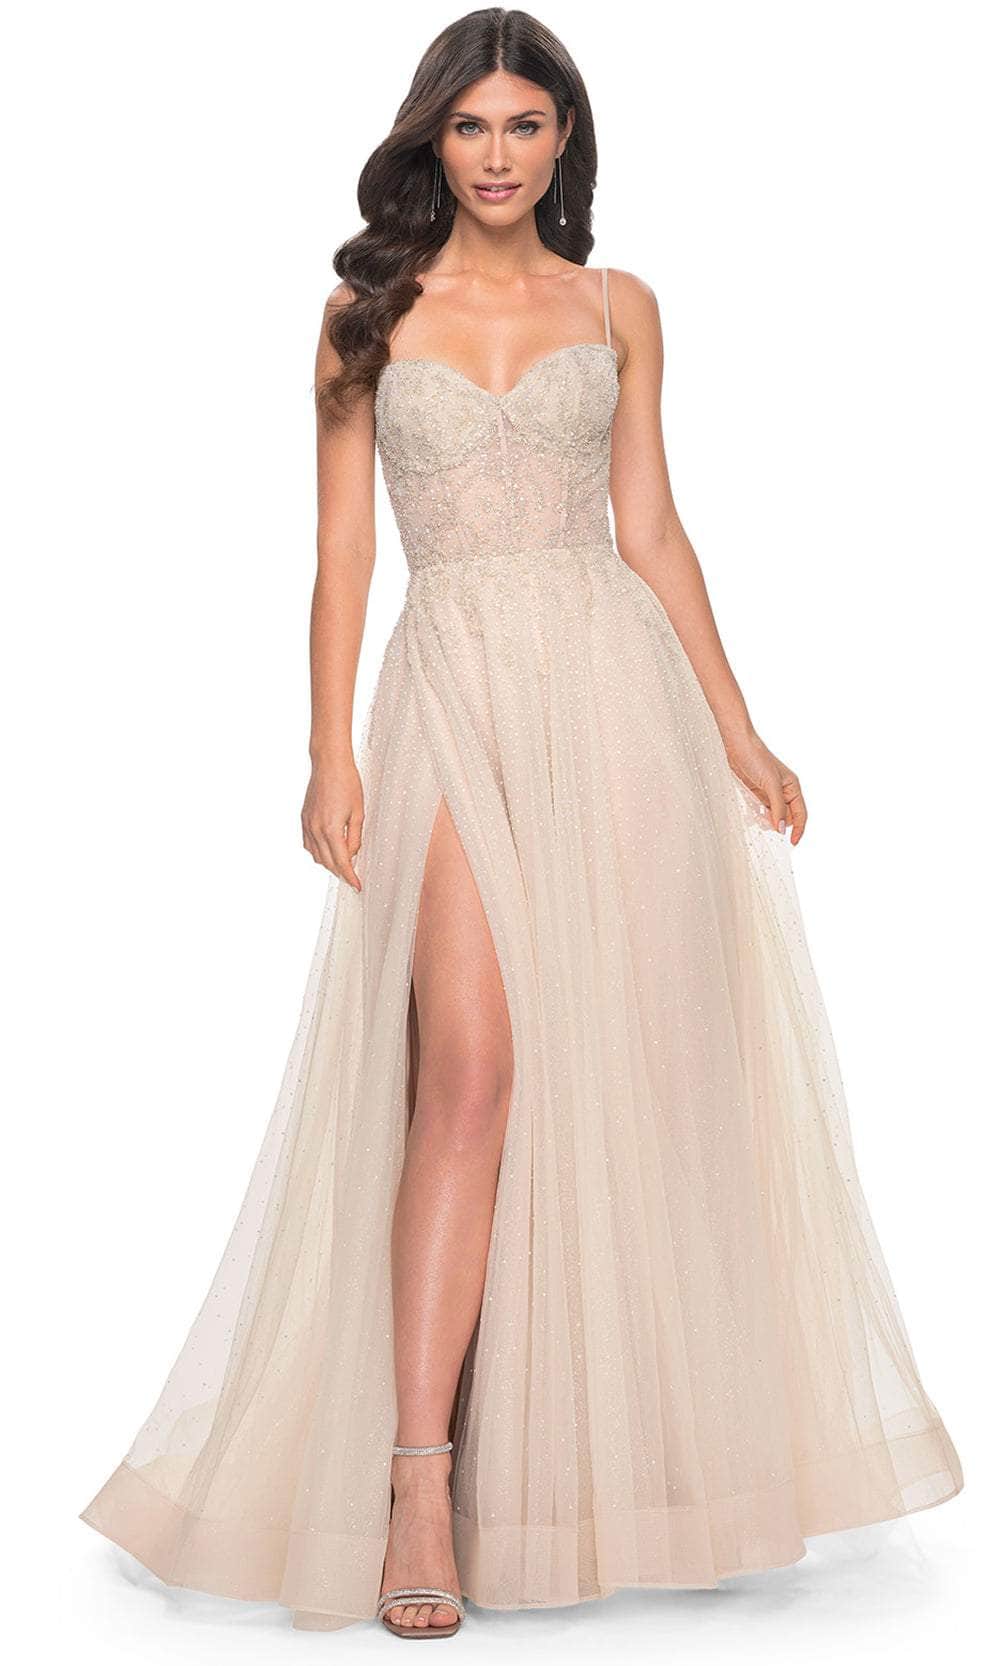 Image of La Femme 32271 - Rhinestone Embellished A-Line Prom Gown